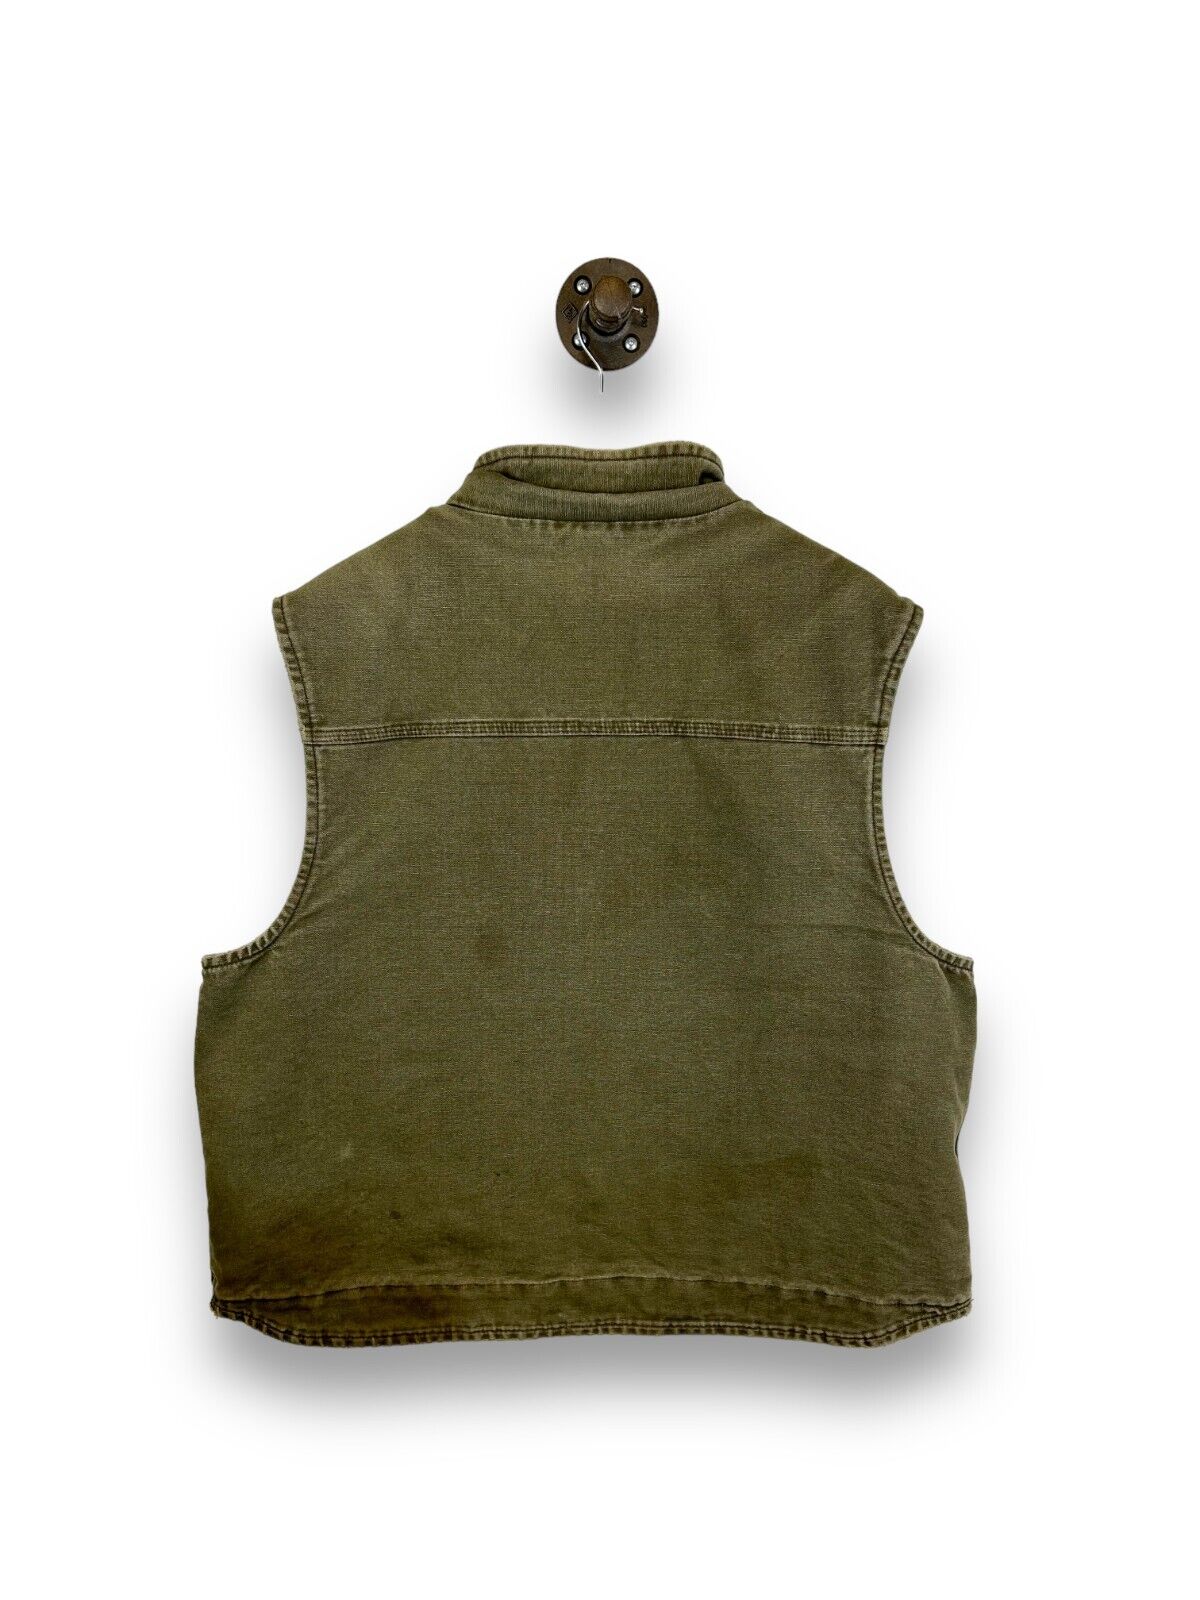 Carhartt Canvas Fleece Lined Work Wear Vest Jacket Size 2XL Green V33ARG